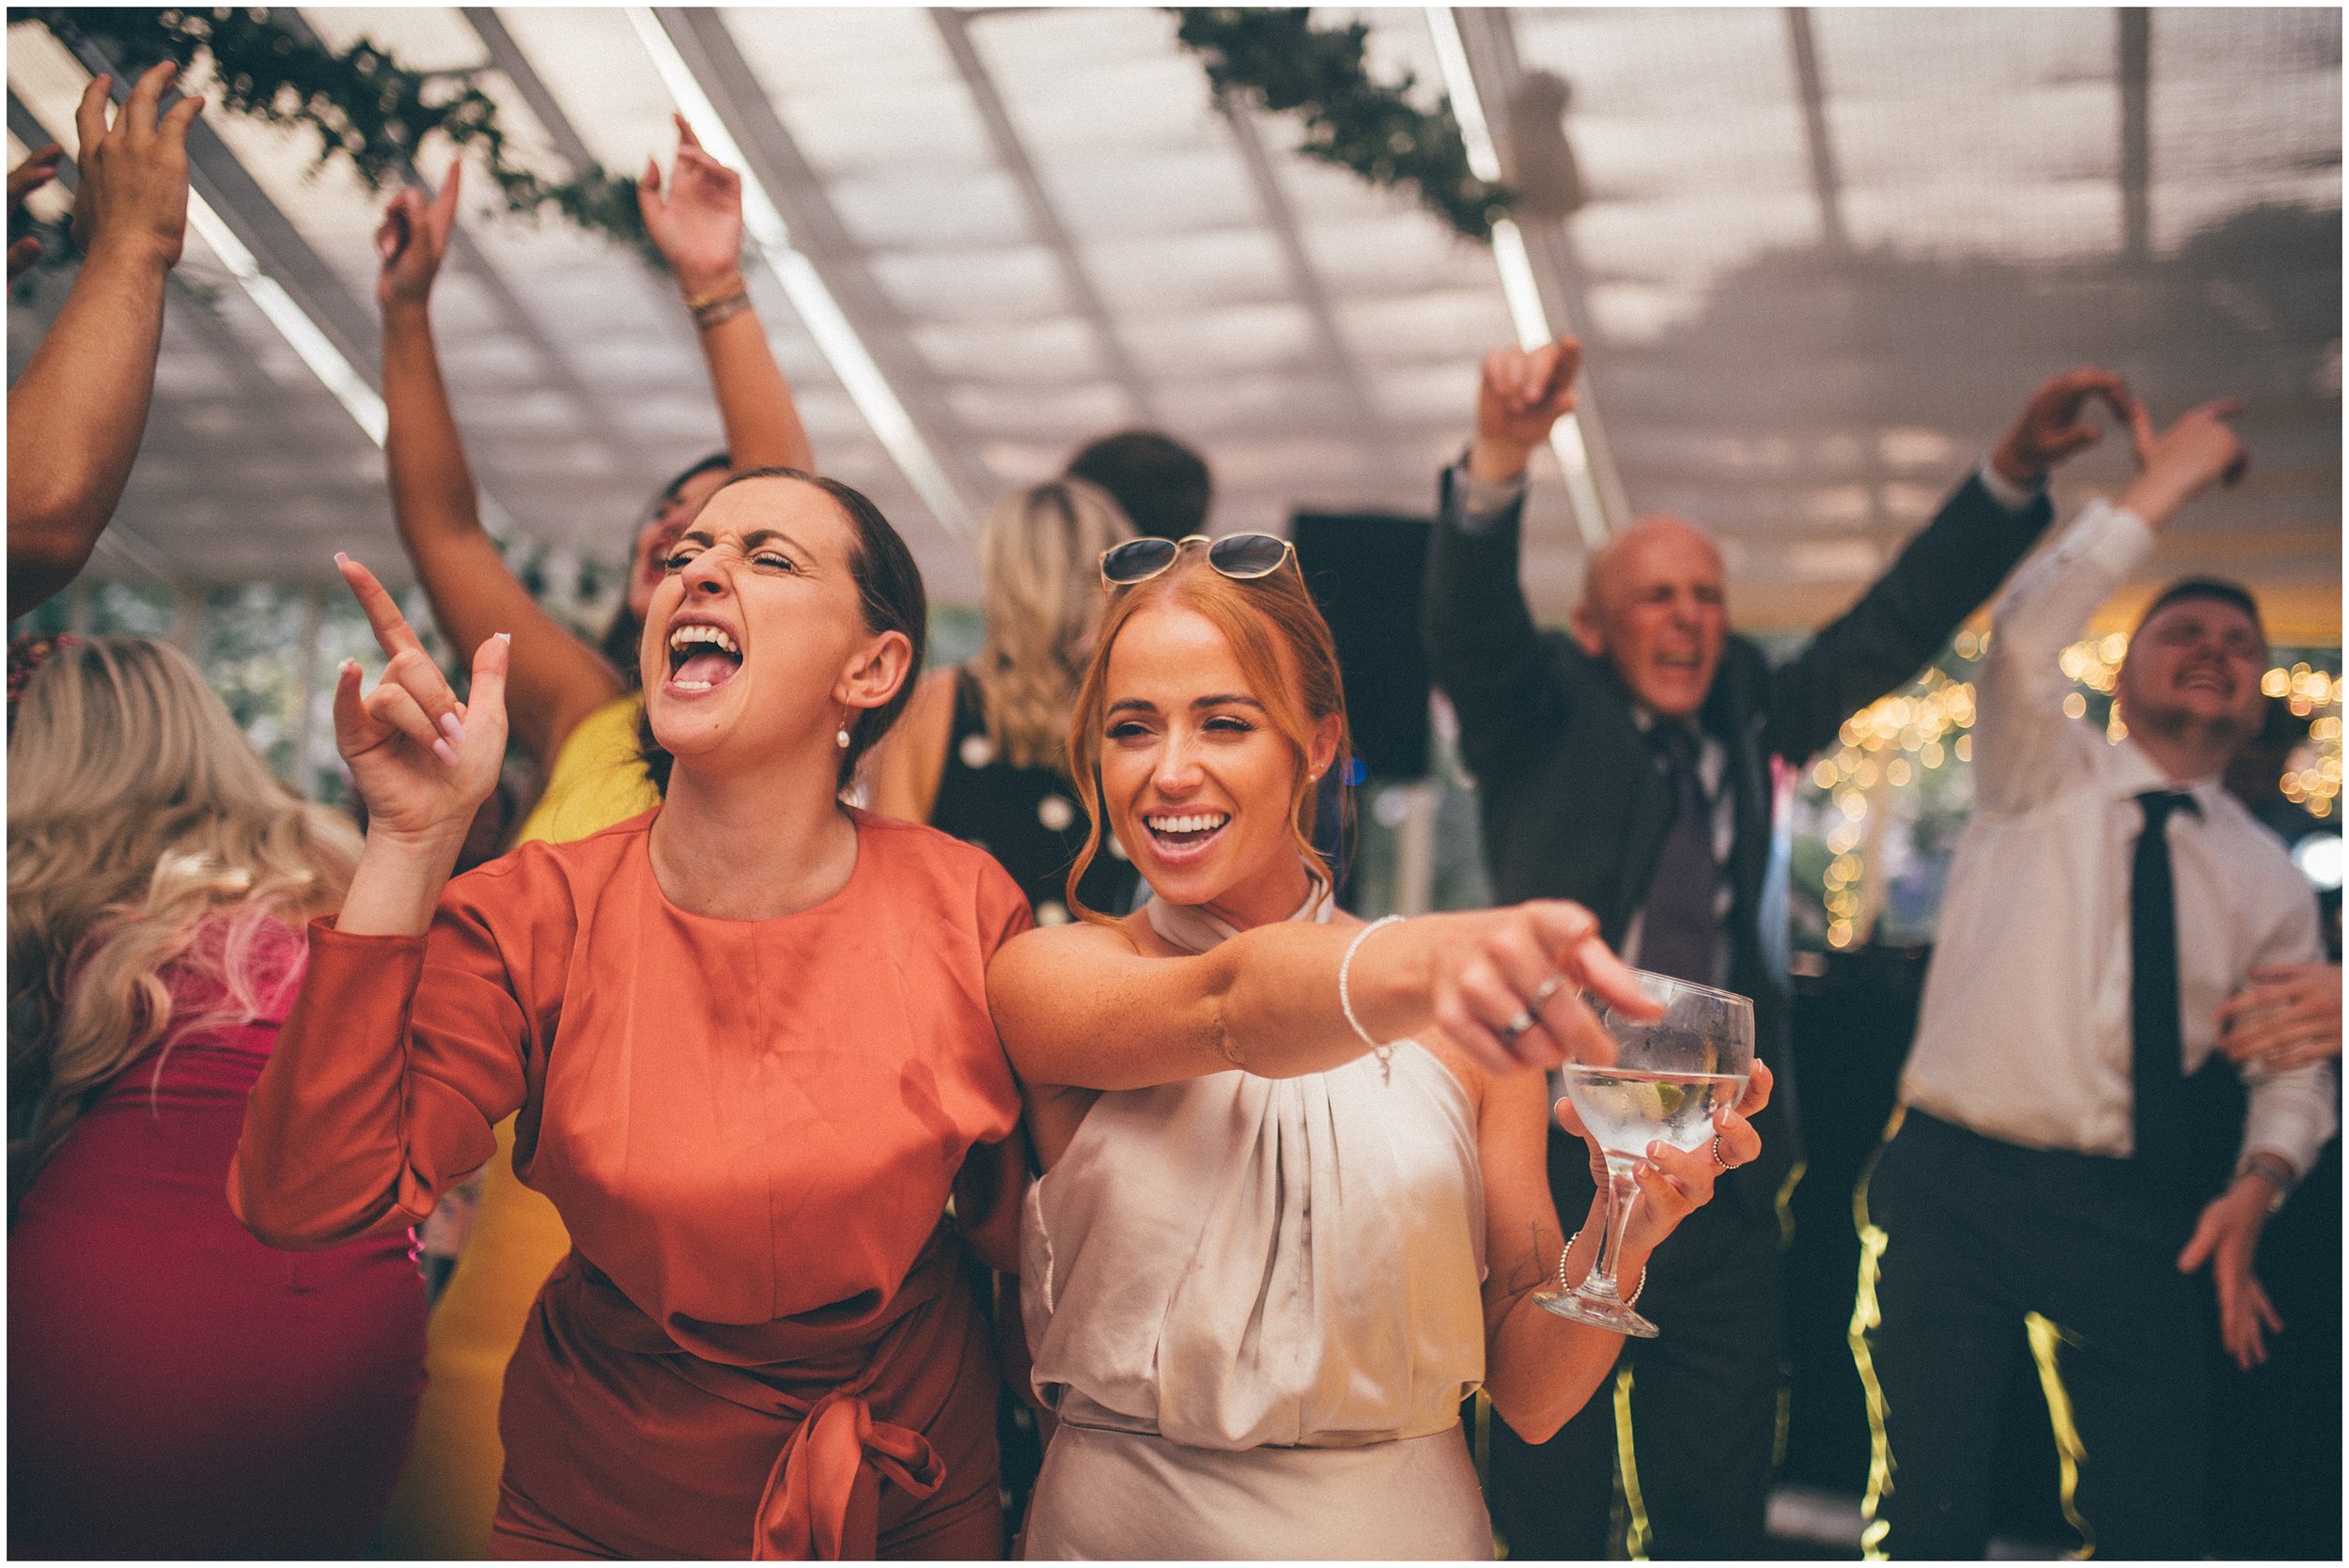 Guests enjoy the dancefloor at Abbeywood Estate wedding venue in Delamere, Cheshire.